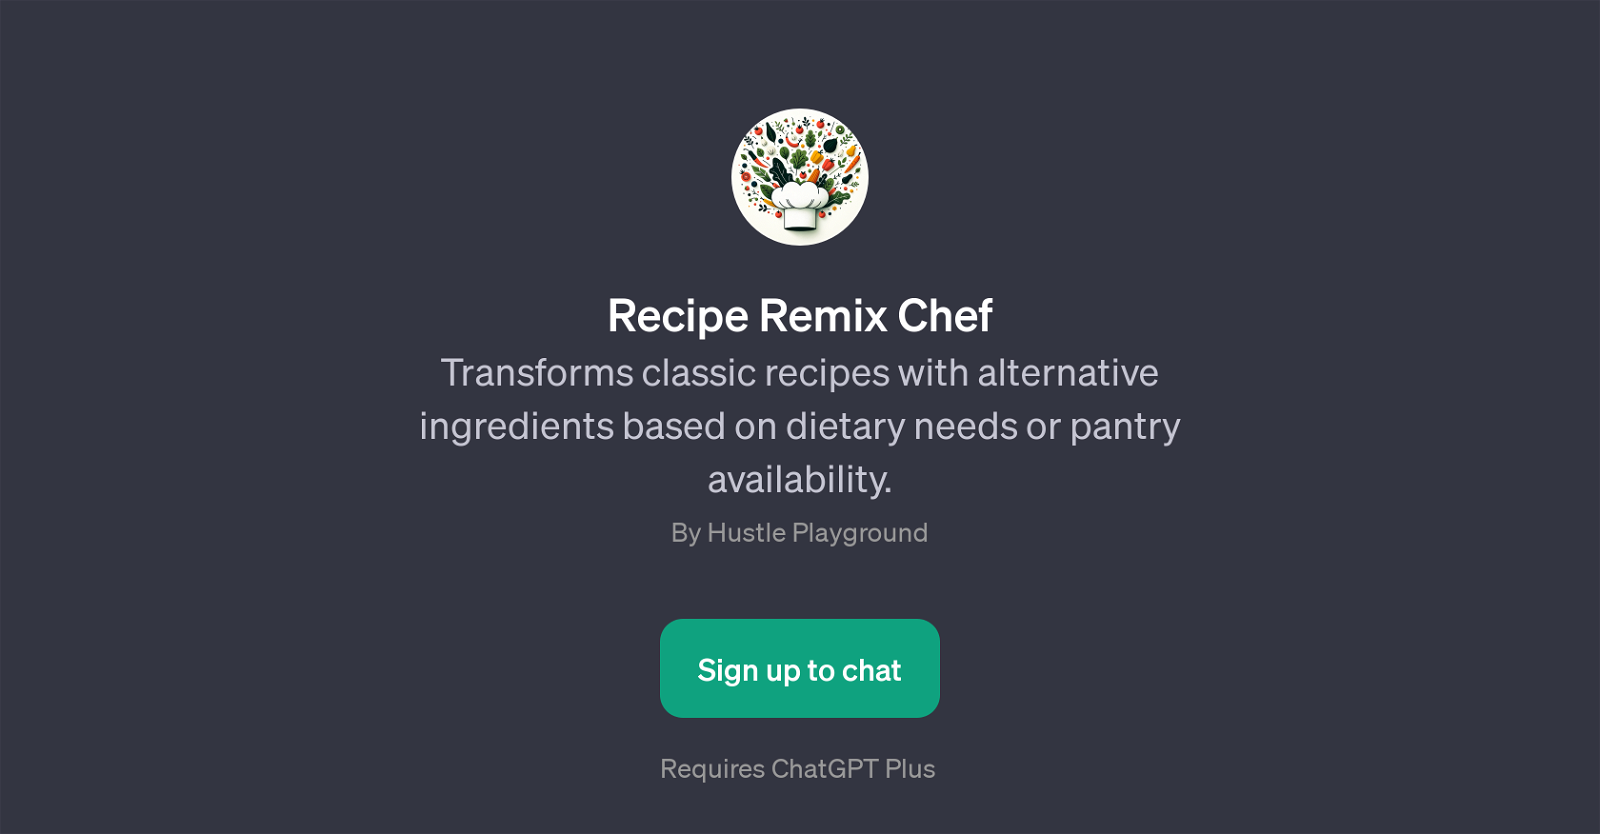 Recipe Remix Chef website